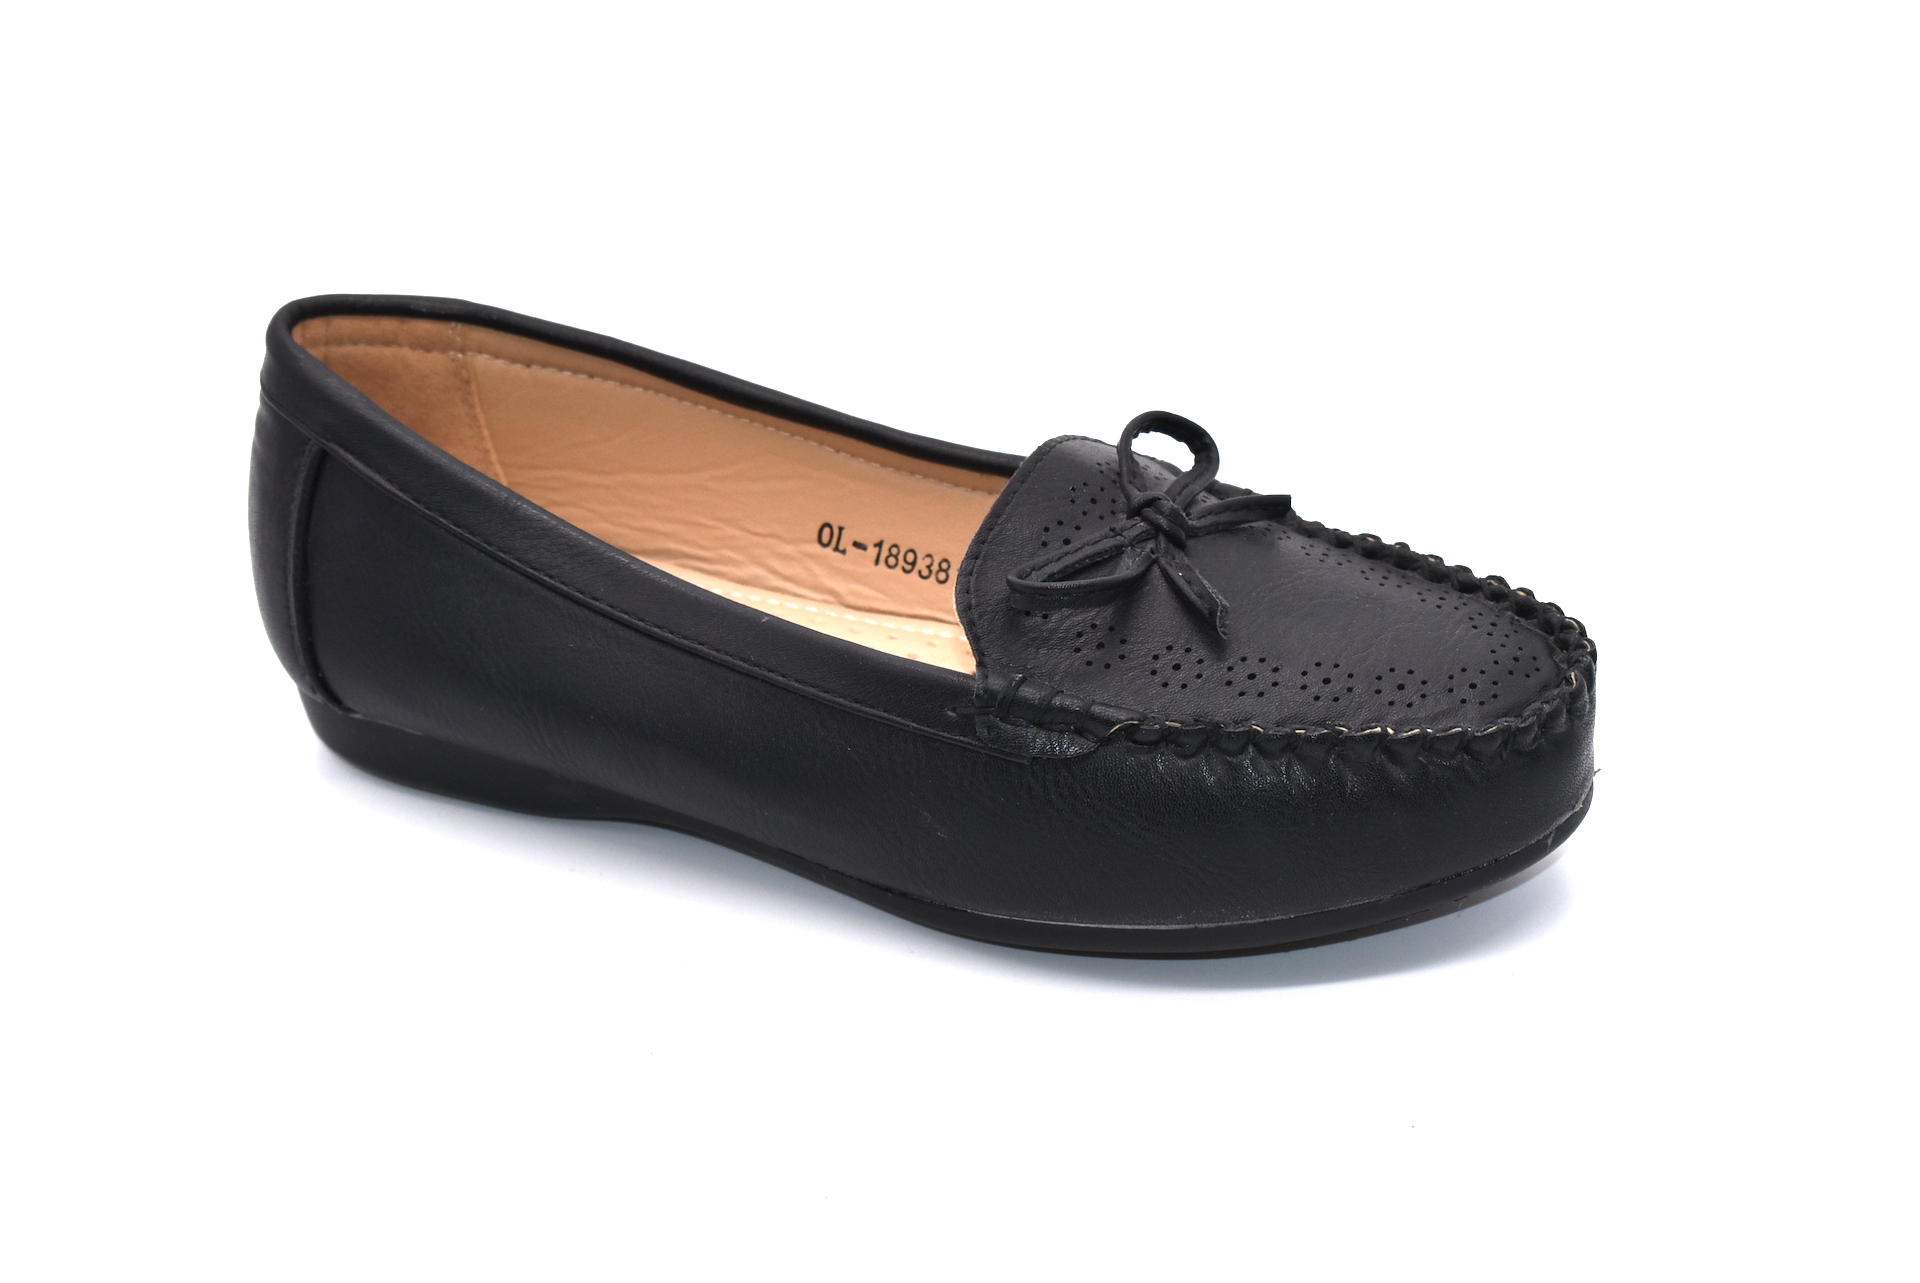 Outland Andi 189381 Women's Flat Shoes 